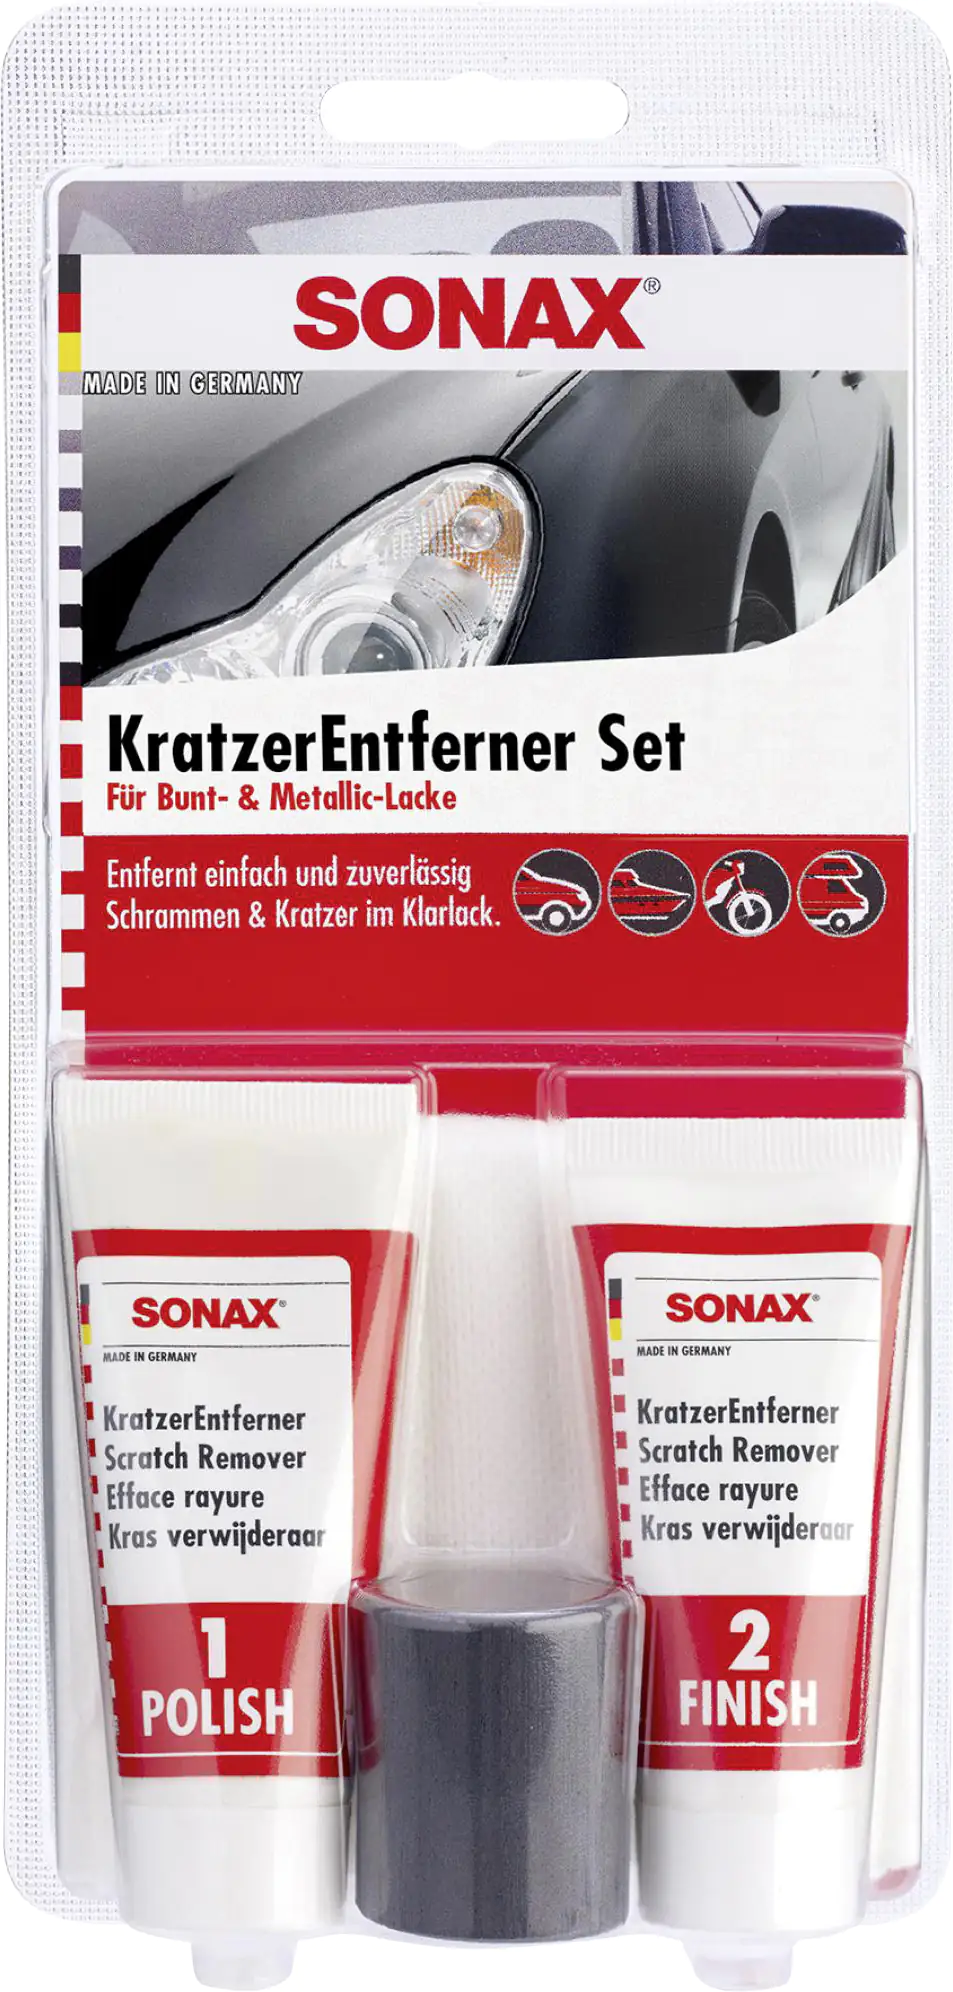 Sonax Kratzerentferner Set Lack Polish + Finish kaufen